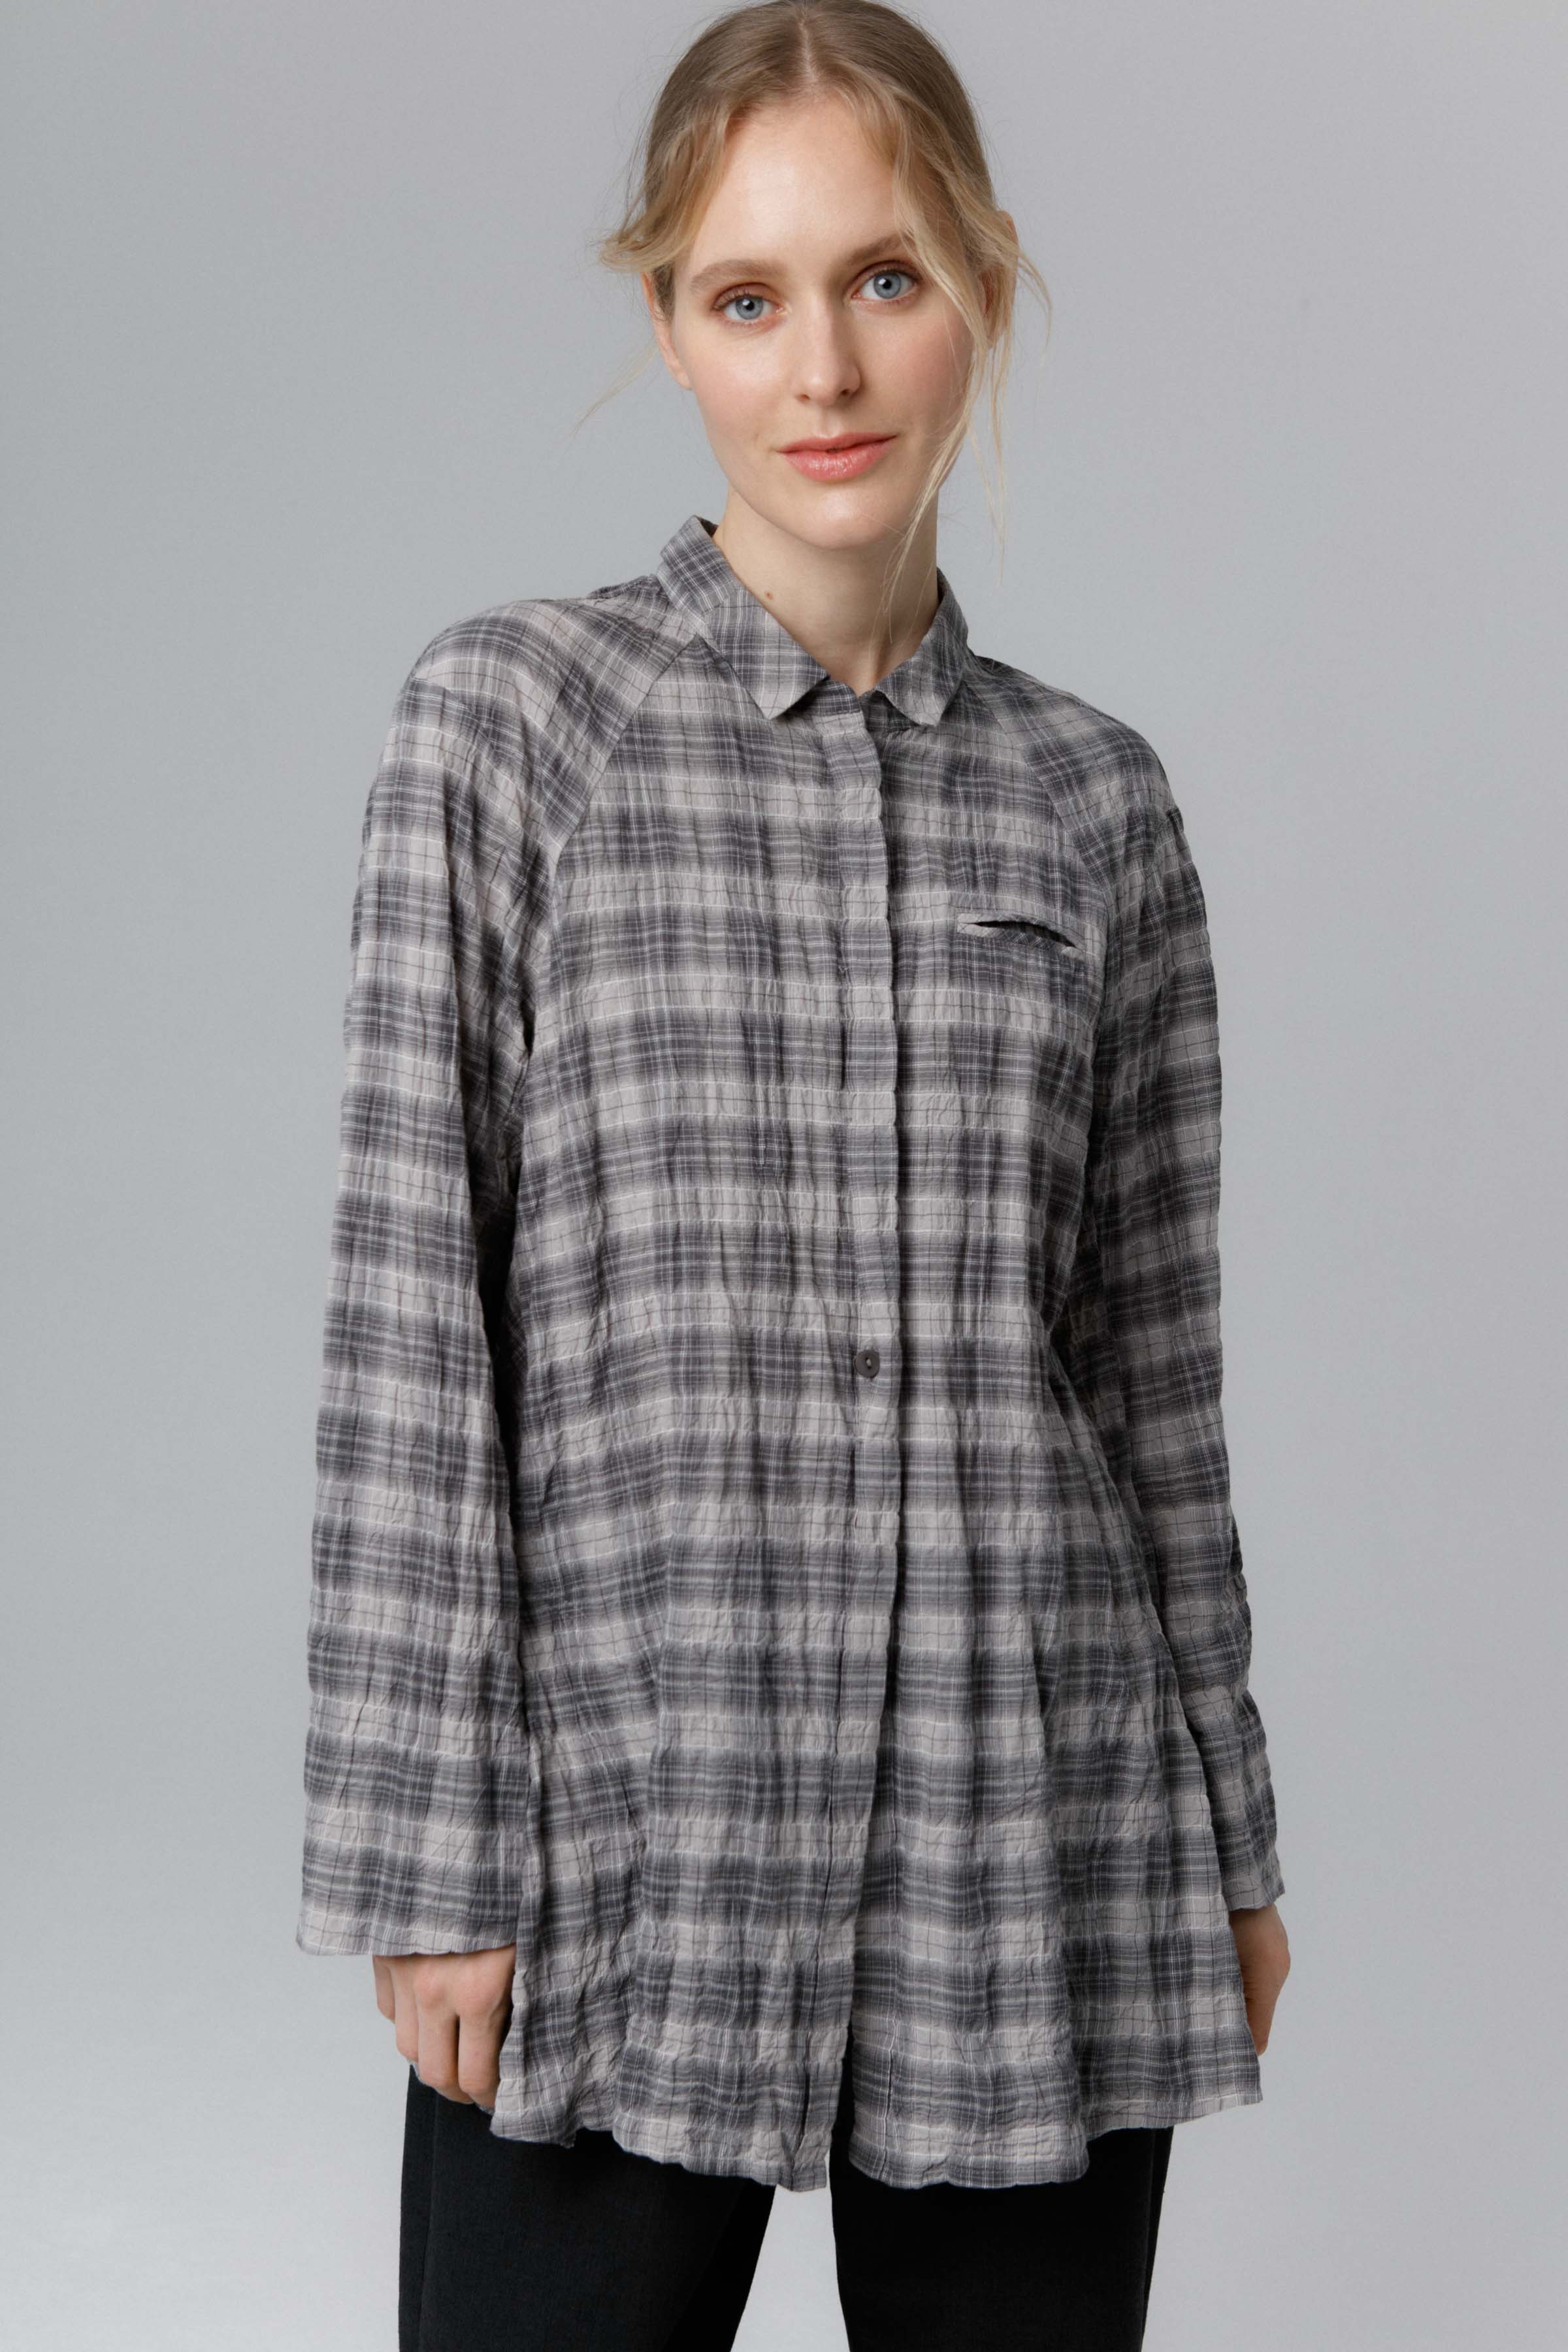 Блуза Рубашка в клетку 15 Серый меланж (melange gris) от Lesel (Лесель)! Заказывайте по ✆ 8 (800) 777 02 37